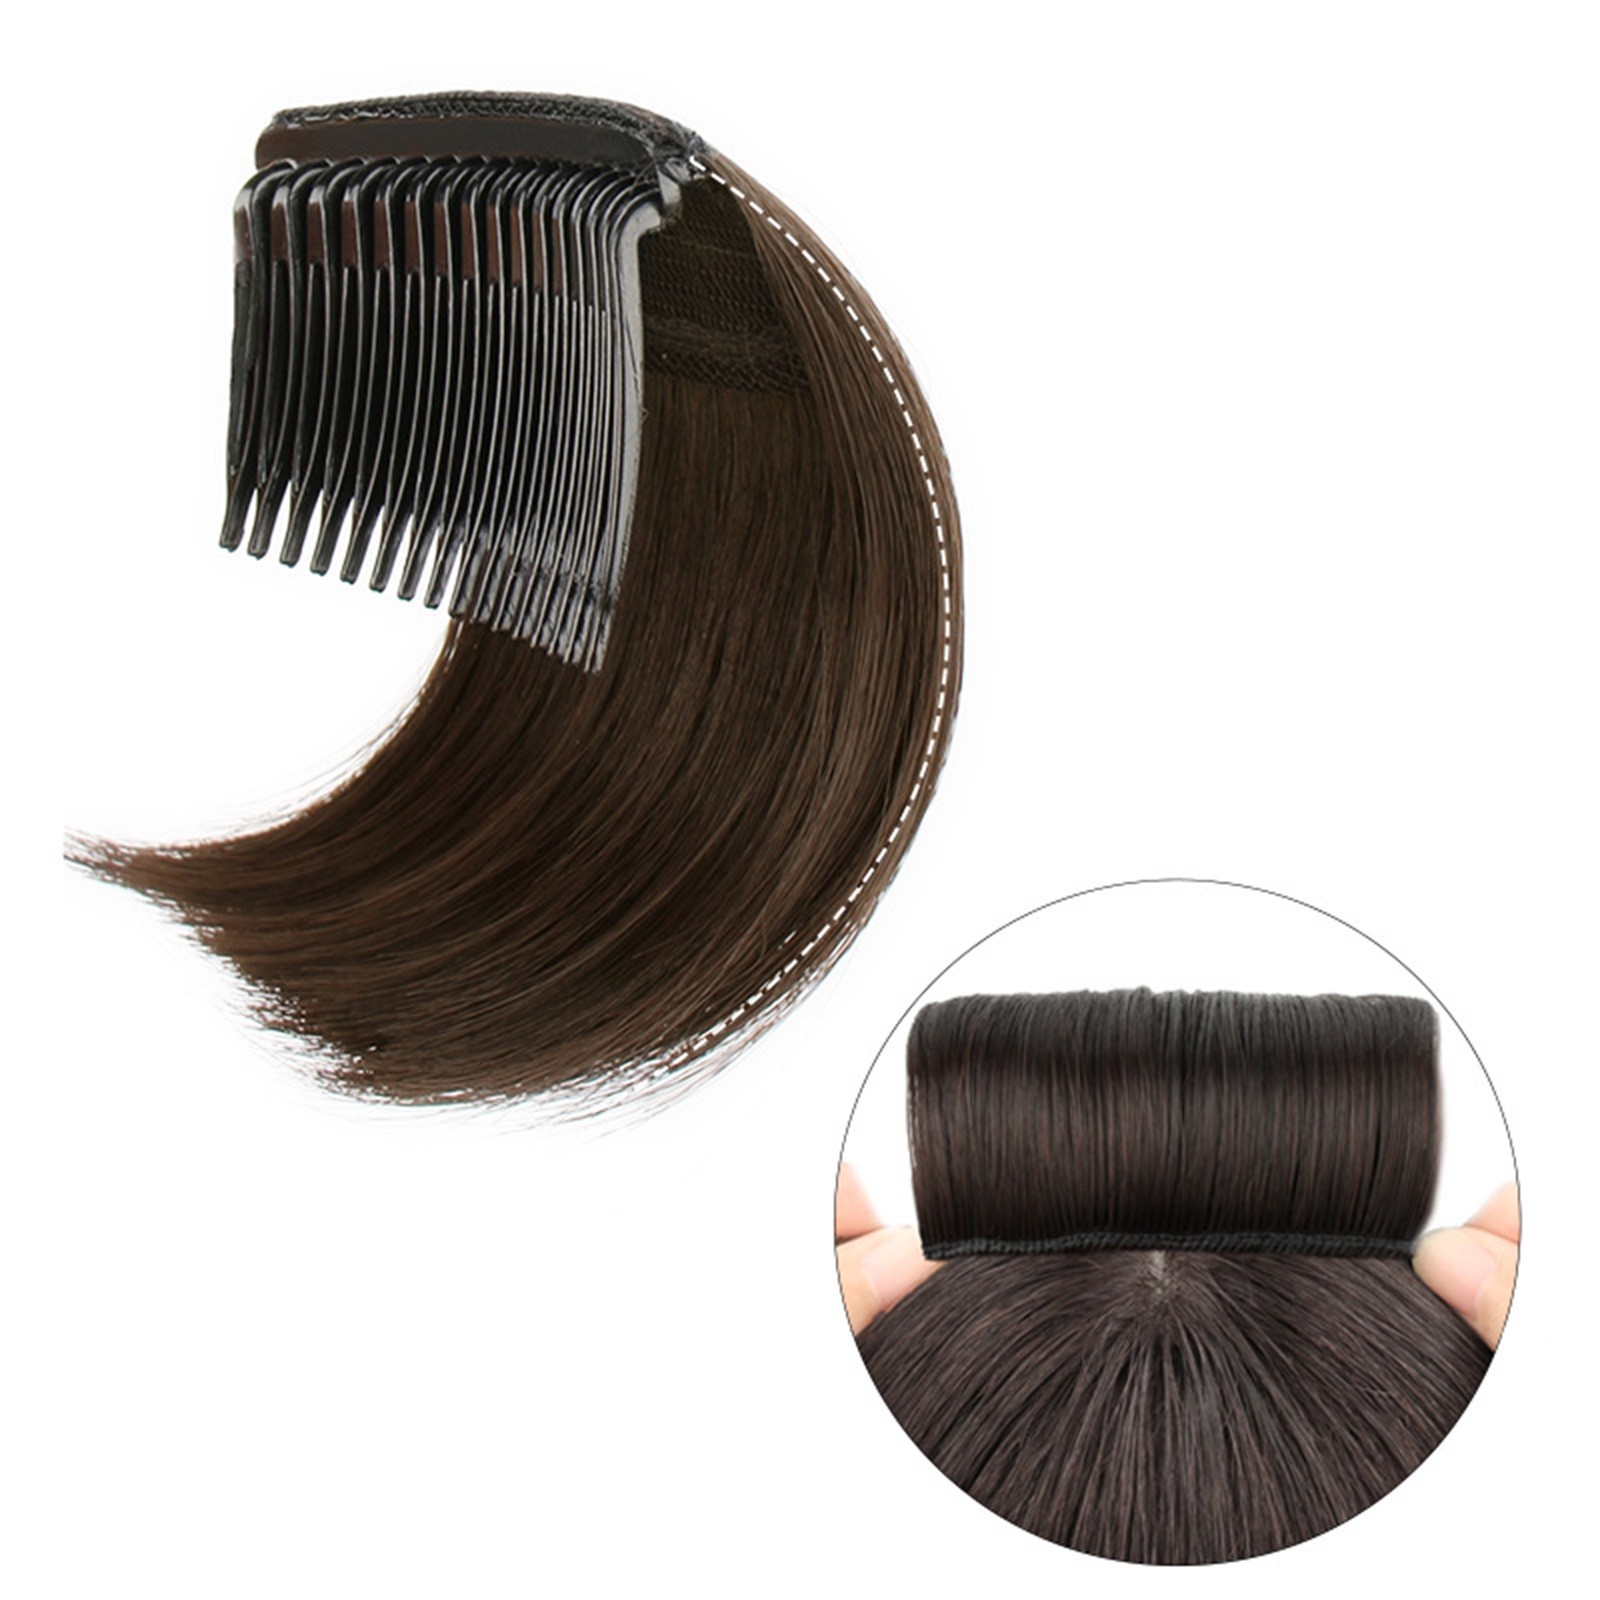 HSMQHJWE Hair Clip for Thick Hair Women Hair Puff Increase Female Pad Comb Comb Hair Hair Simulated Powder Hair Top Pad Wig Hair Pad Increase Lazy Baby Hair Accessories Clip - image 4 of 5